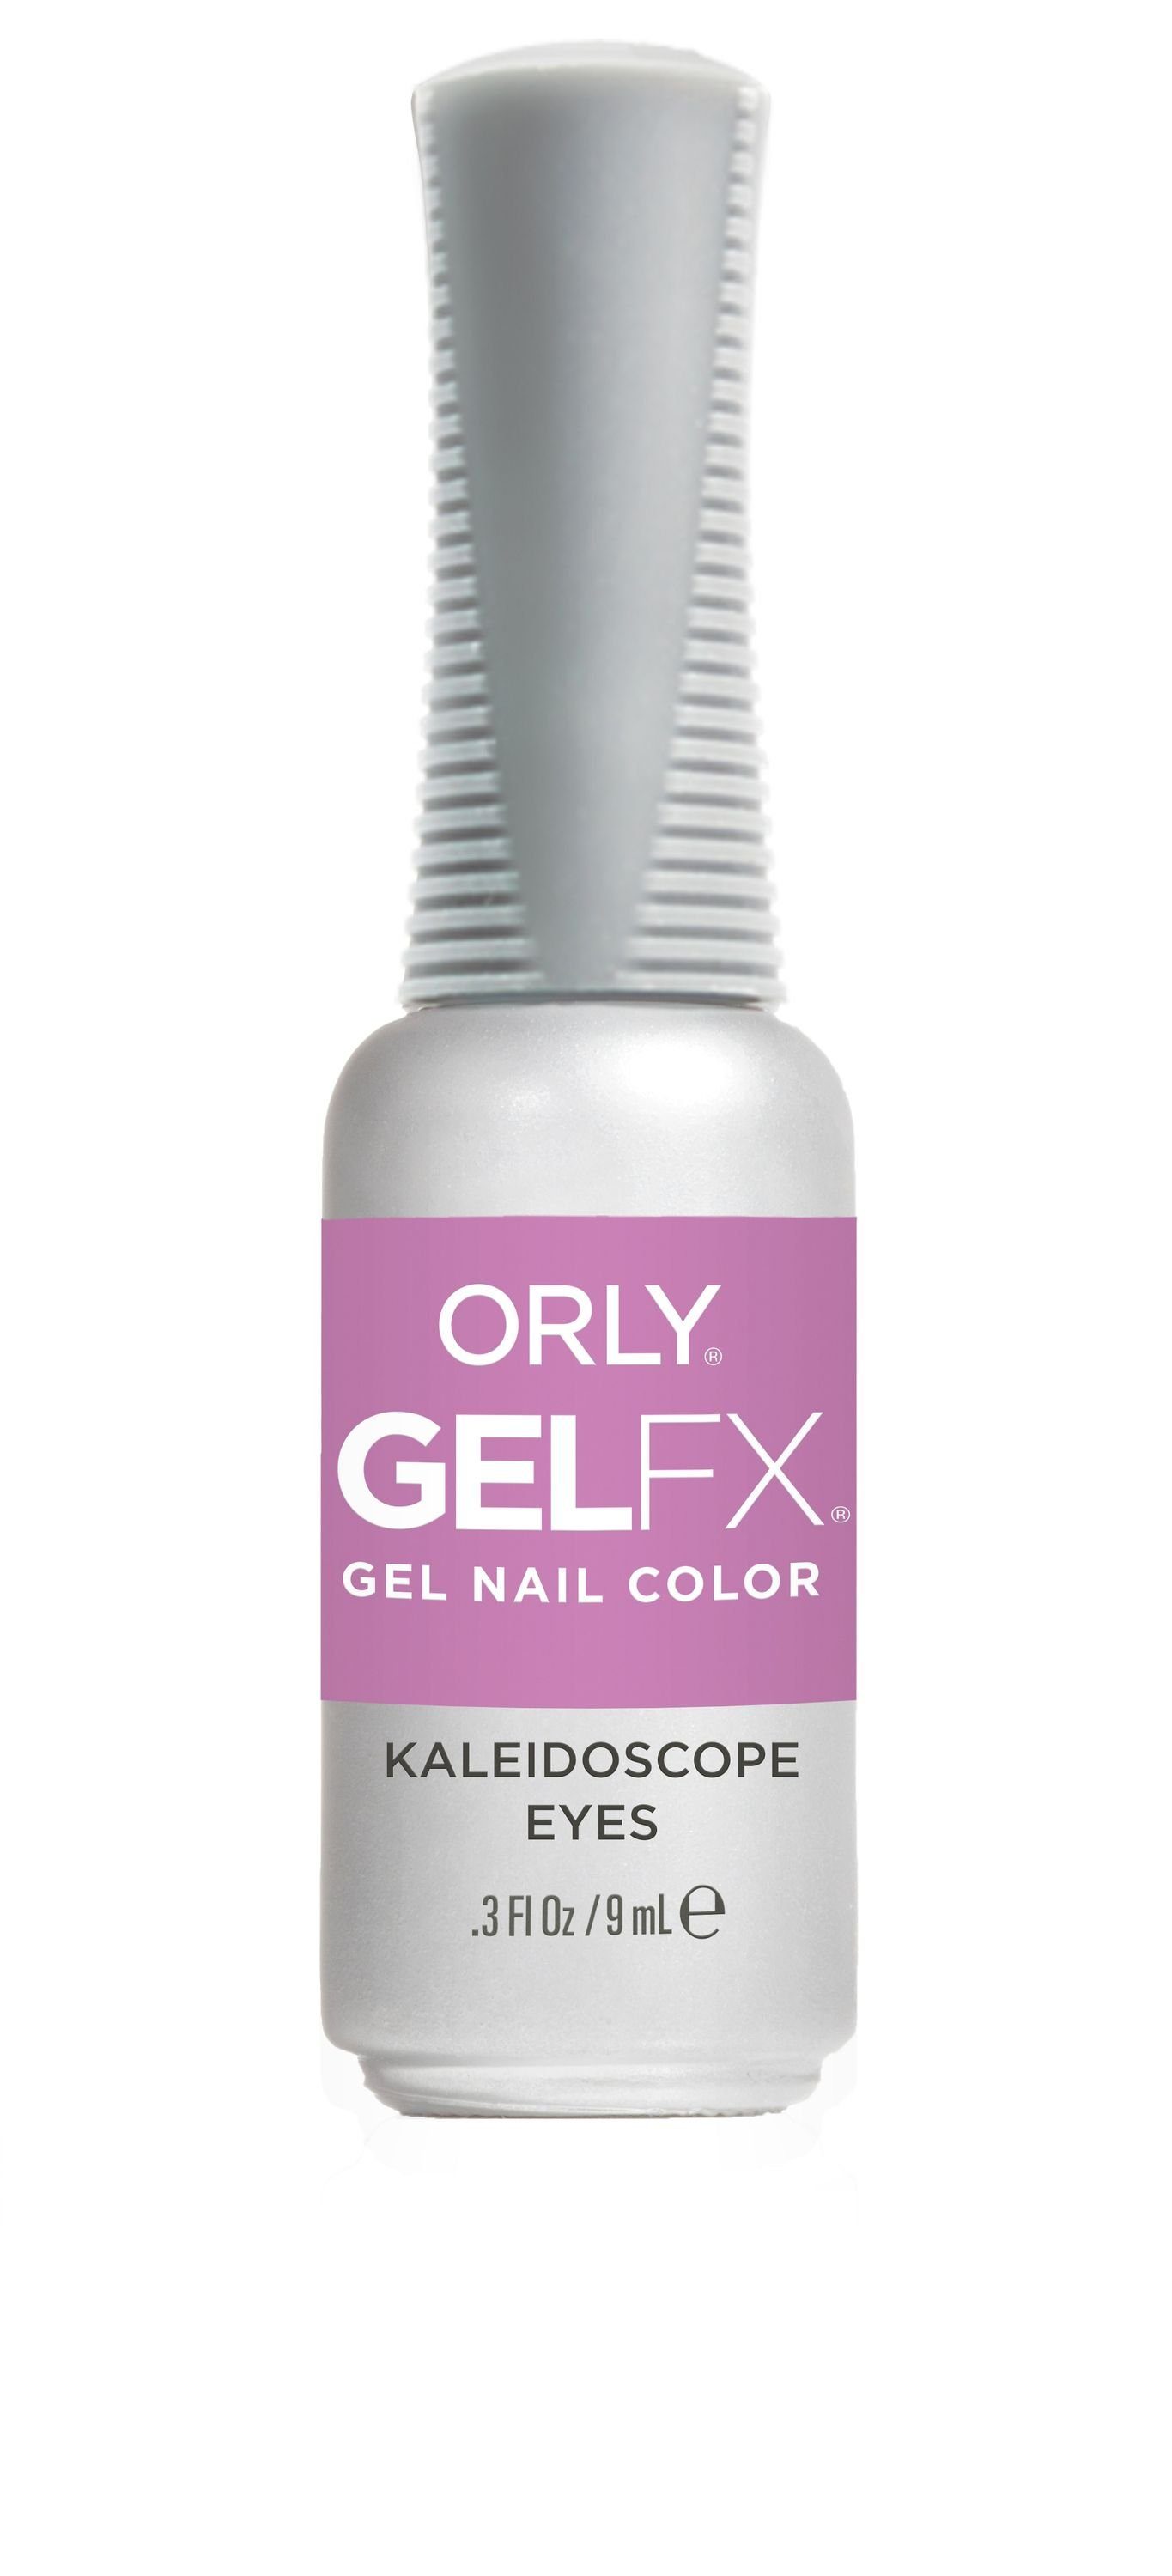 ORLY UV-Nagellack GEL FX Kaleidoscope Eyes, 9 ml